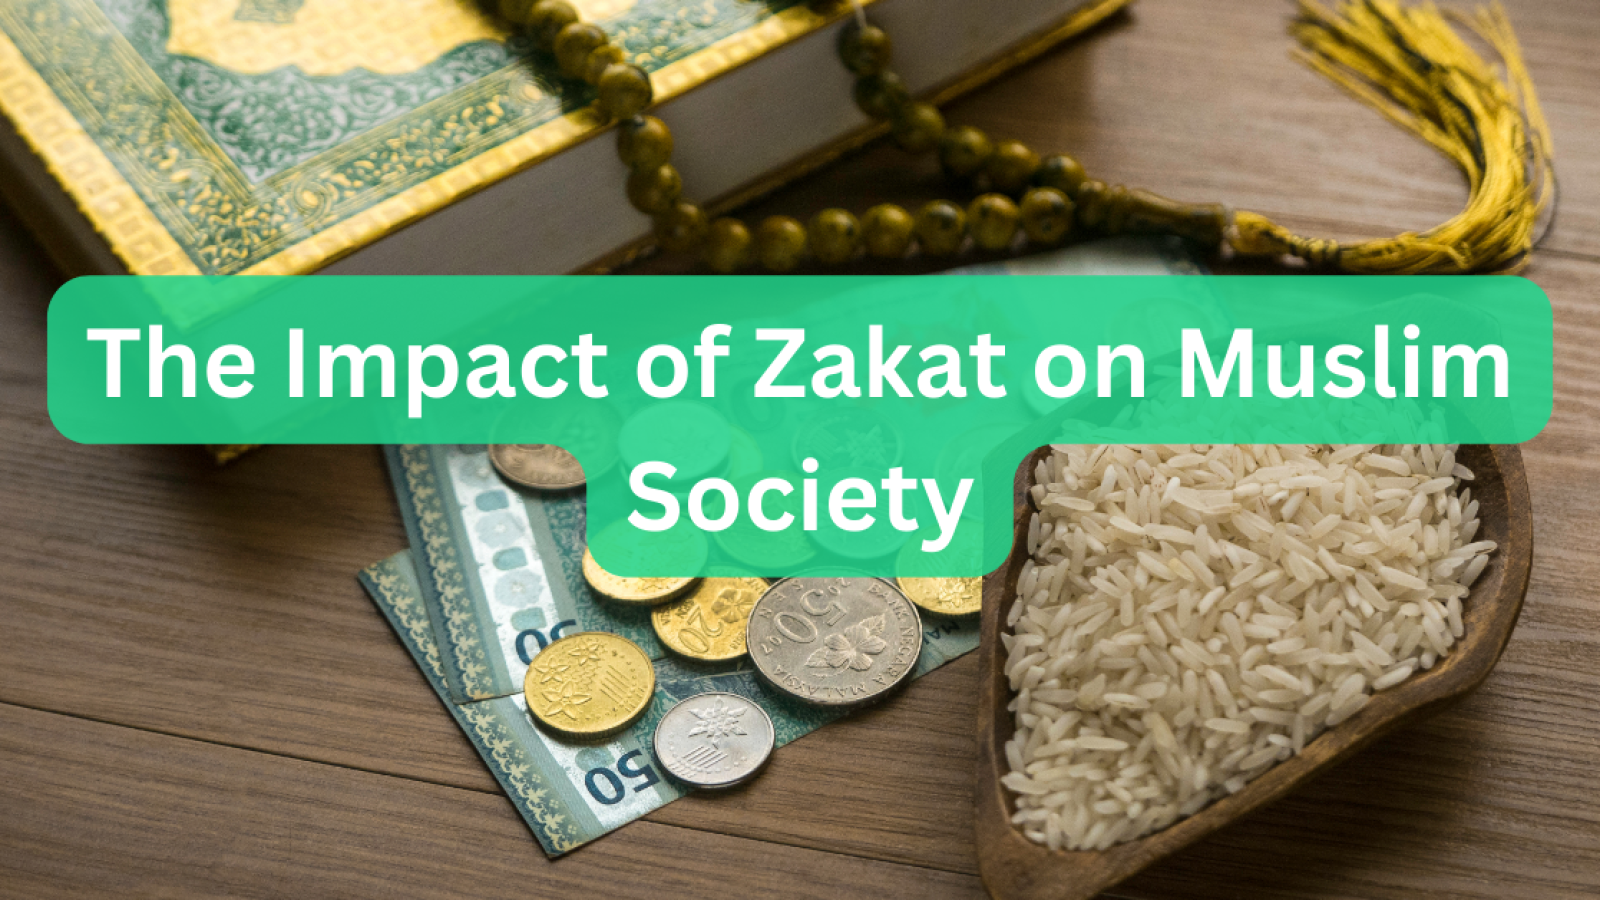 The Impact of Zakat on Muslim Society